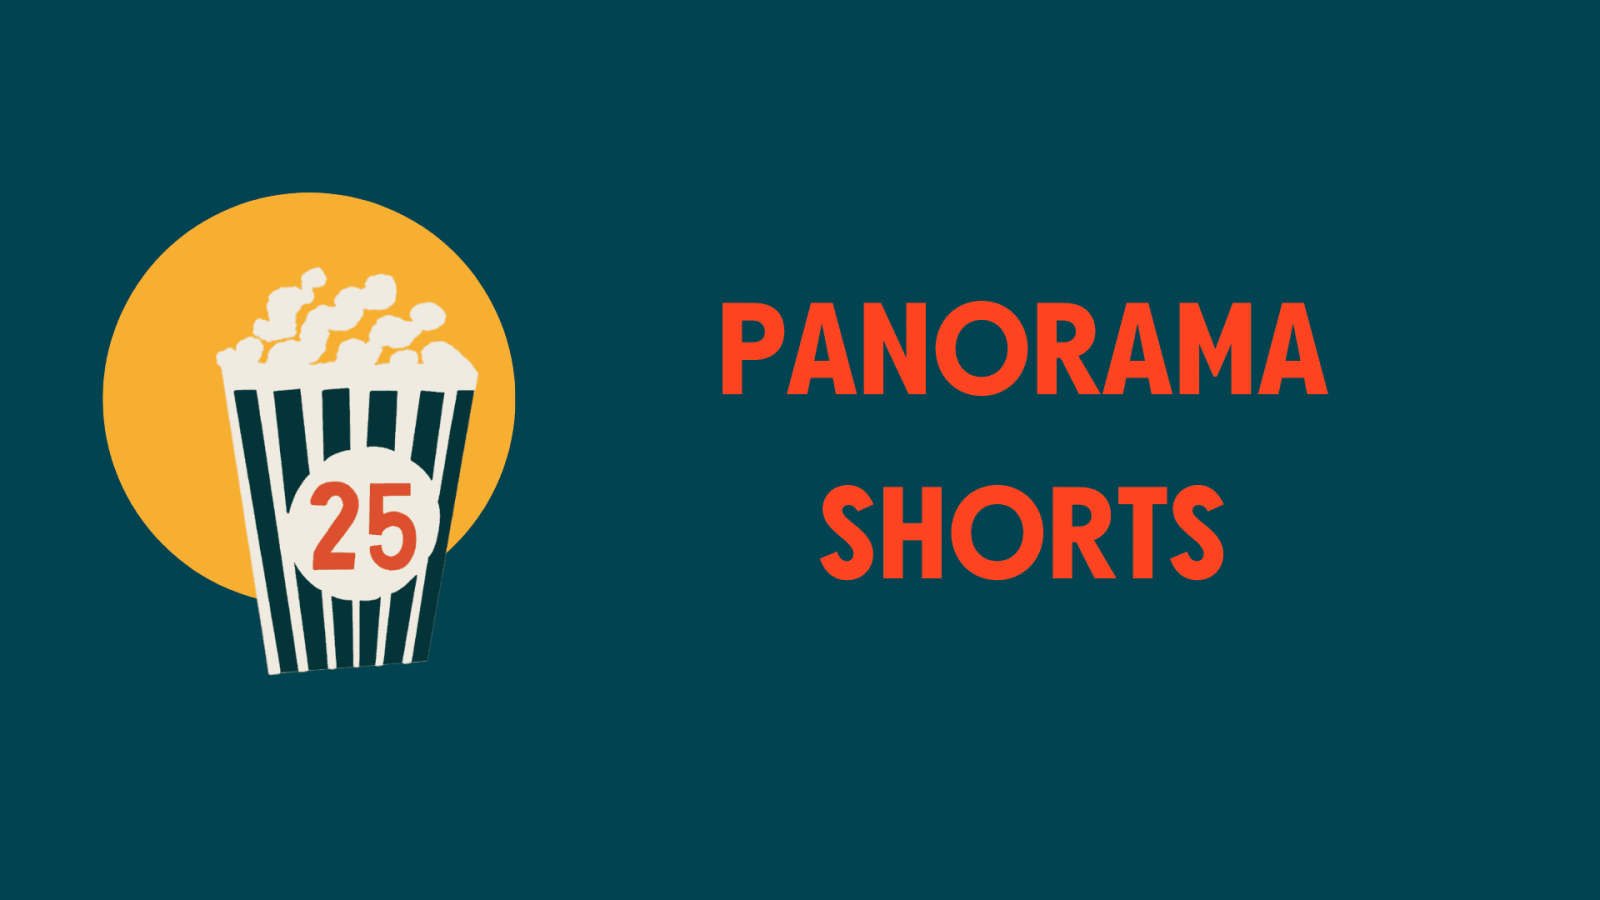 Panorama Shorts Showcase